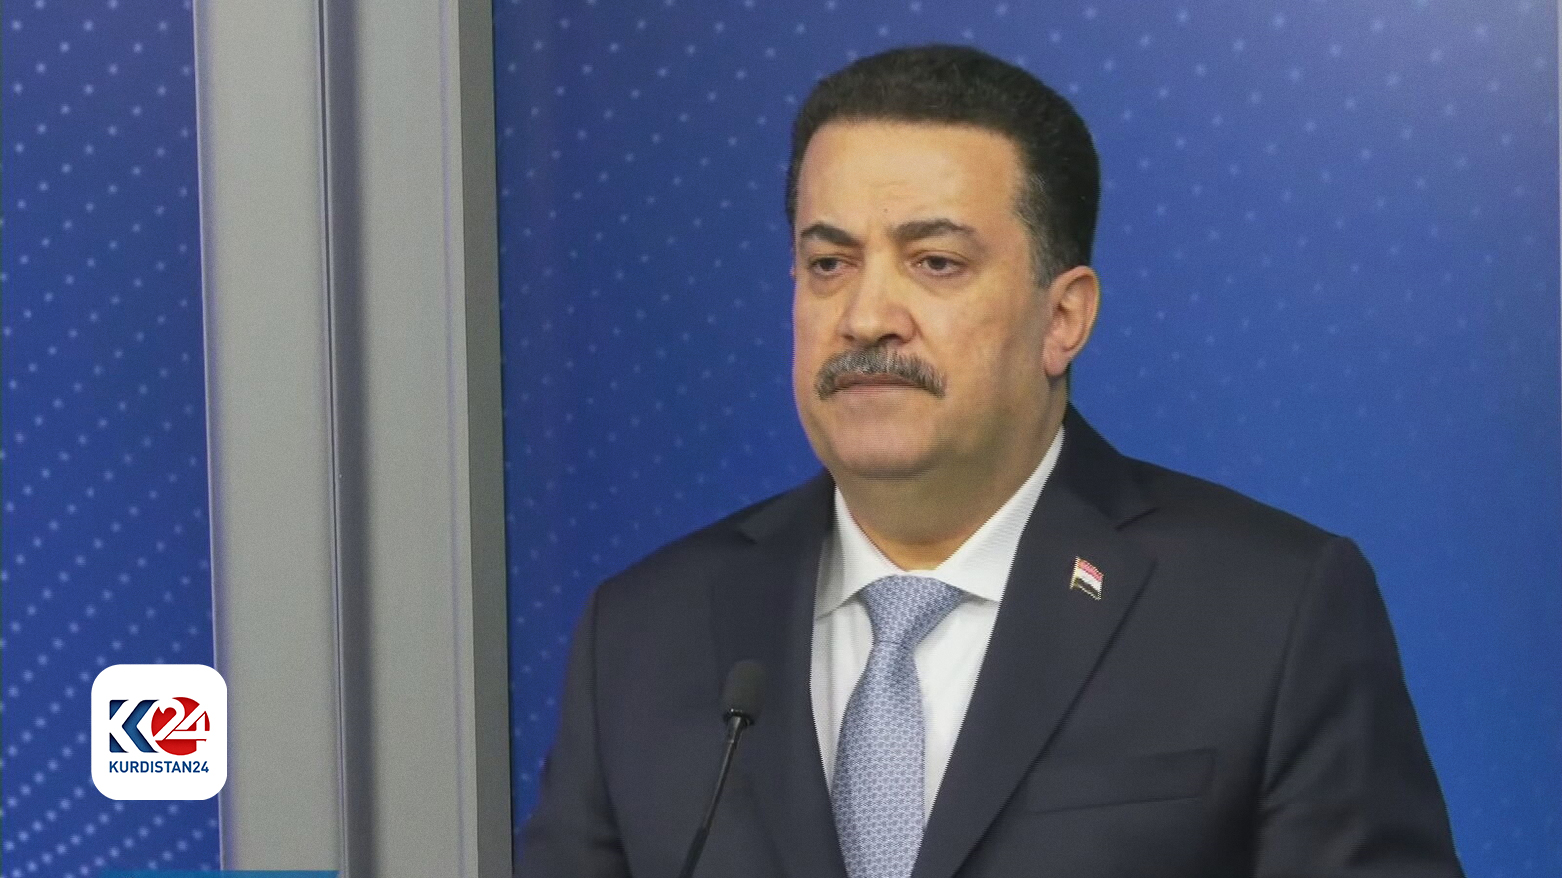 Iraqi Prime Minister extends condolences to Iran following tragic helicopter crash